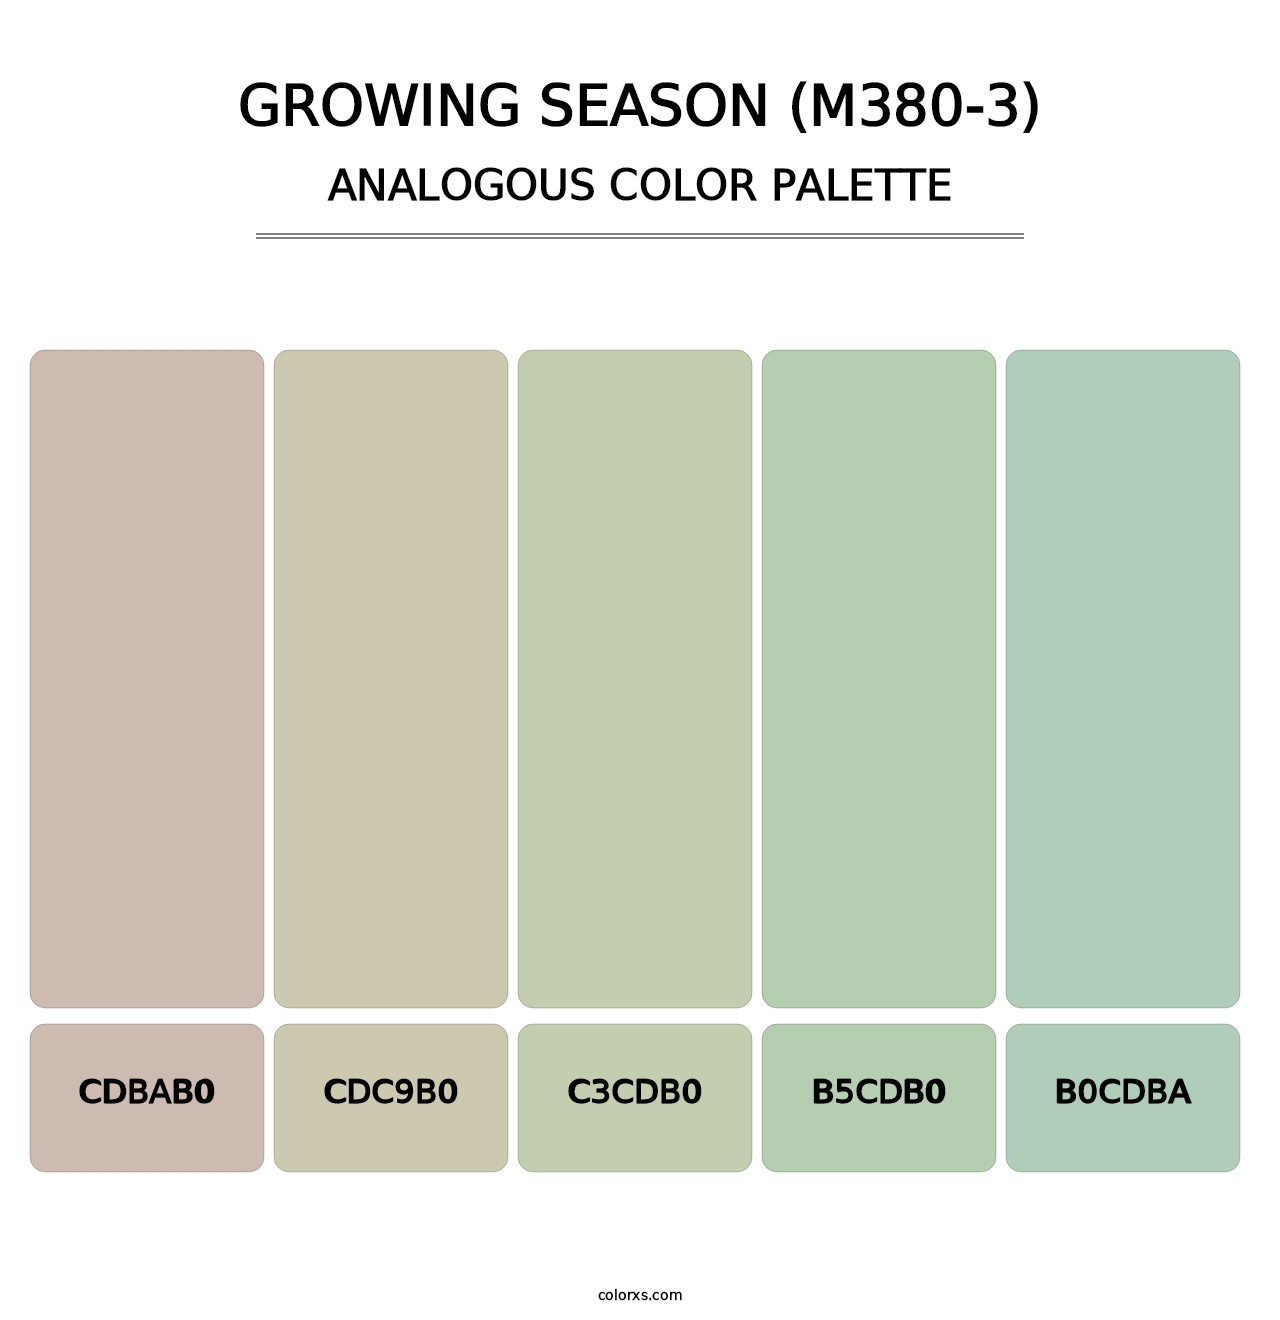 Growing Season (M380-3) - Analogous Color Palette